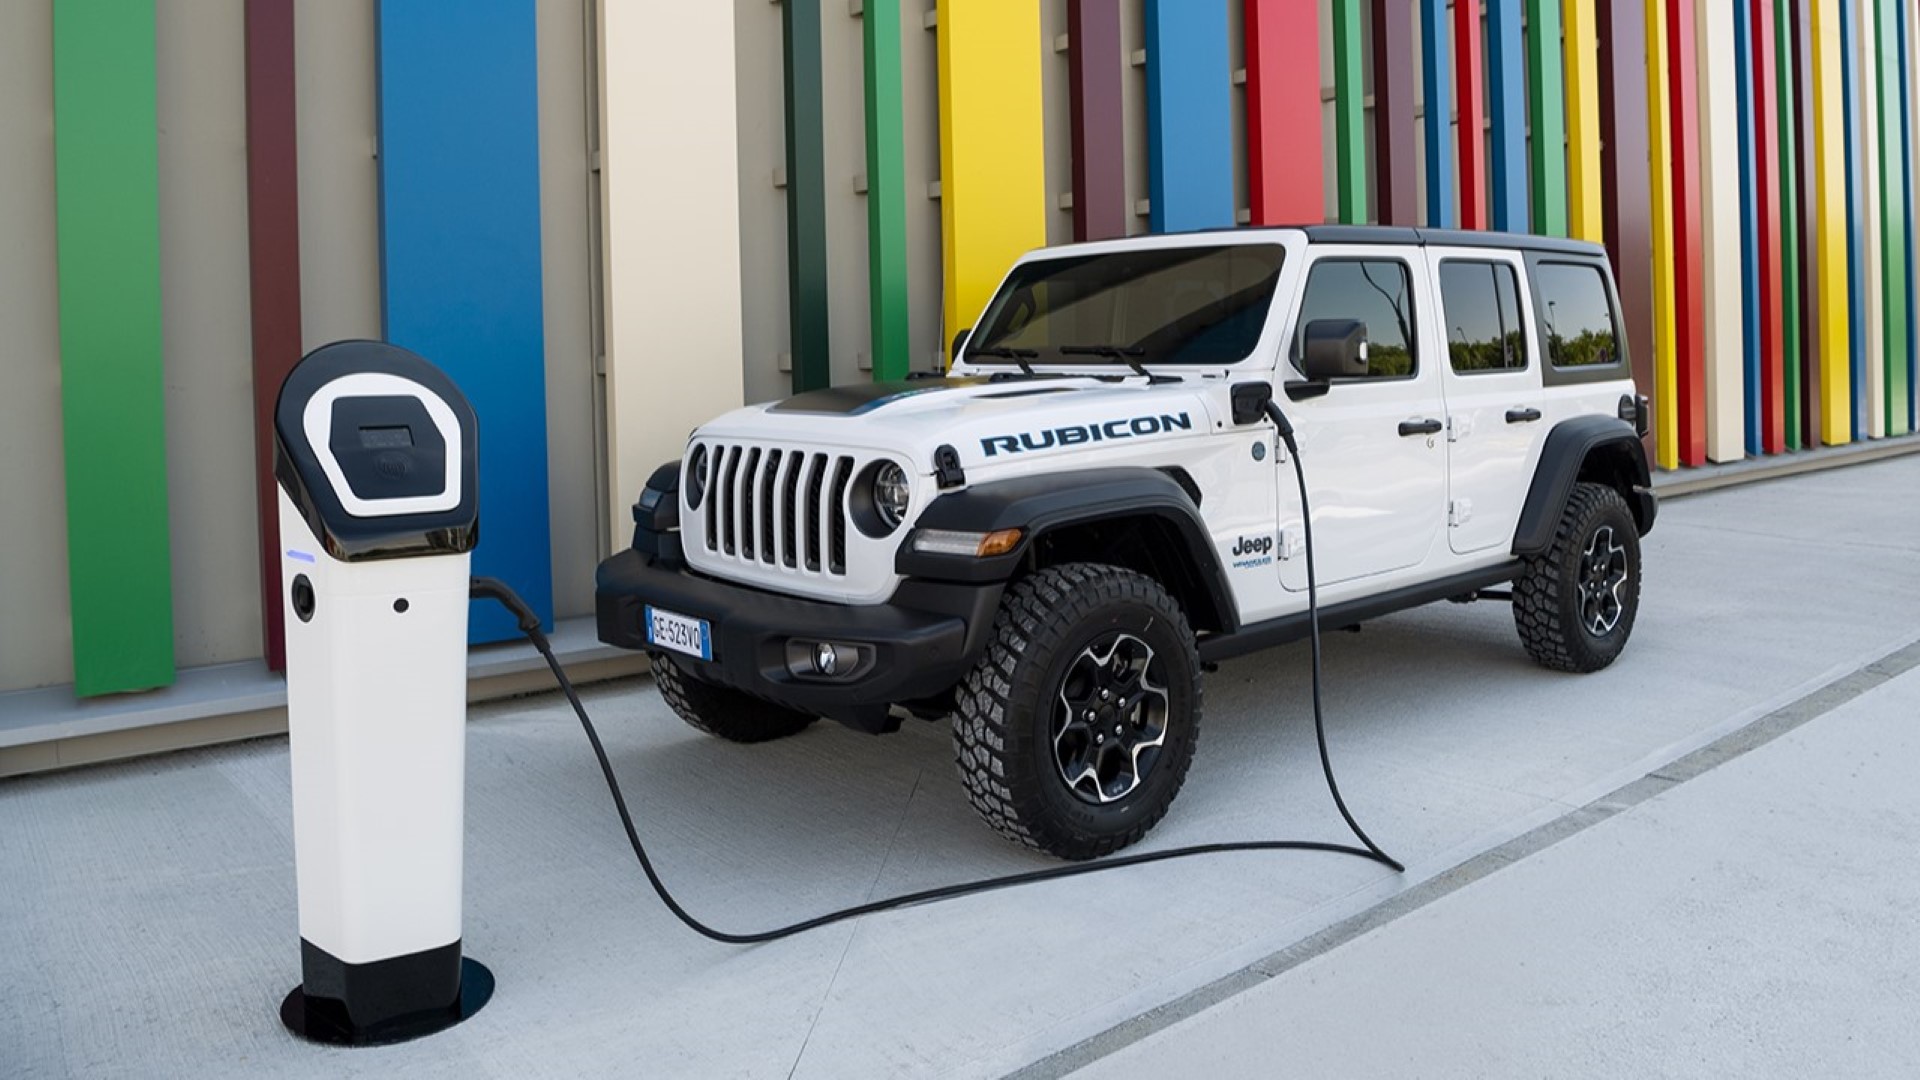 H πρωτοπόρος Jeep εξηλεκτρίζει τις πωλήσεις στις Η.Π.Α.